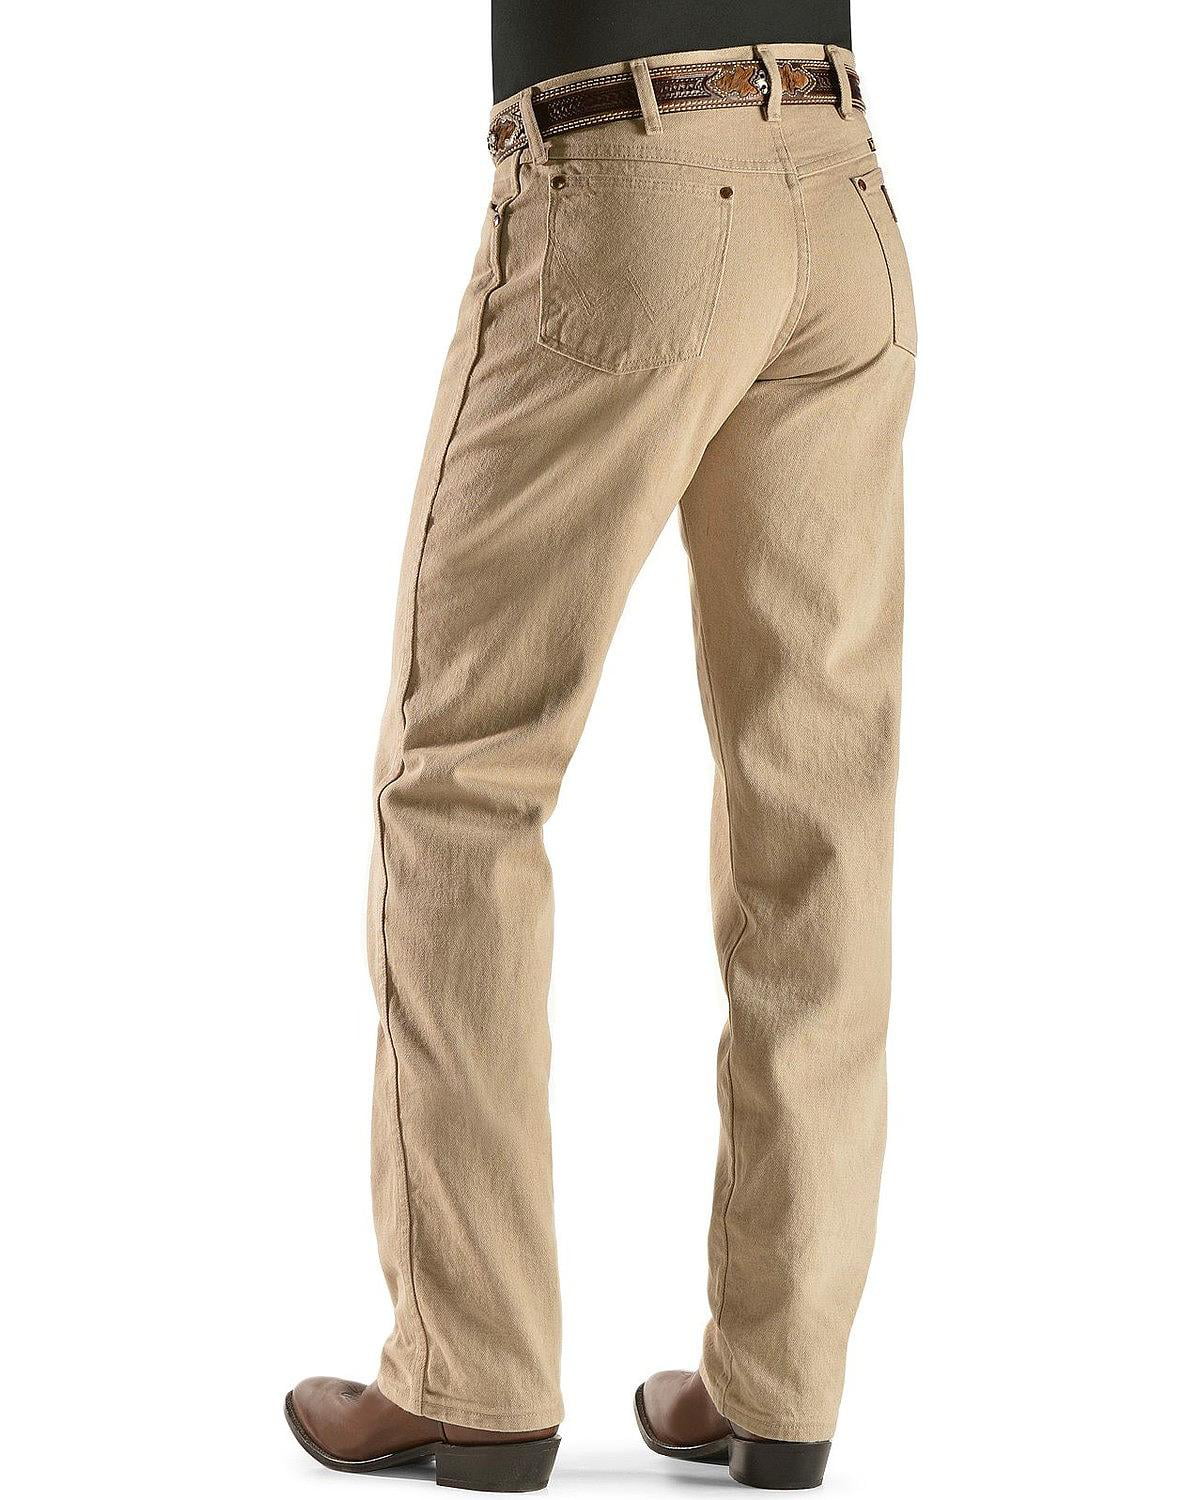 Wrangler - wrangler men's jeans 13mwz original fit prewashed colors ...